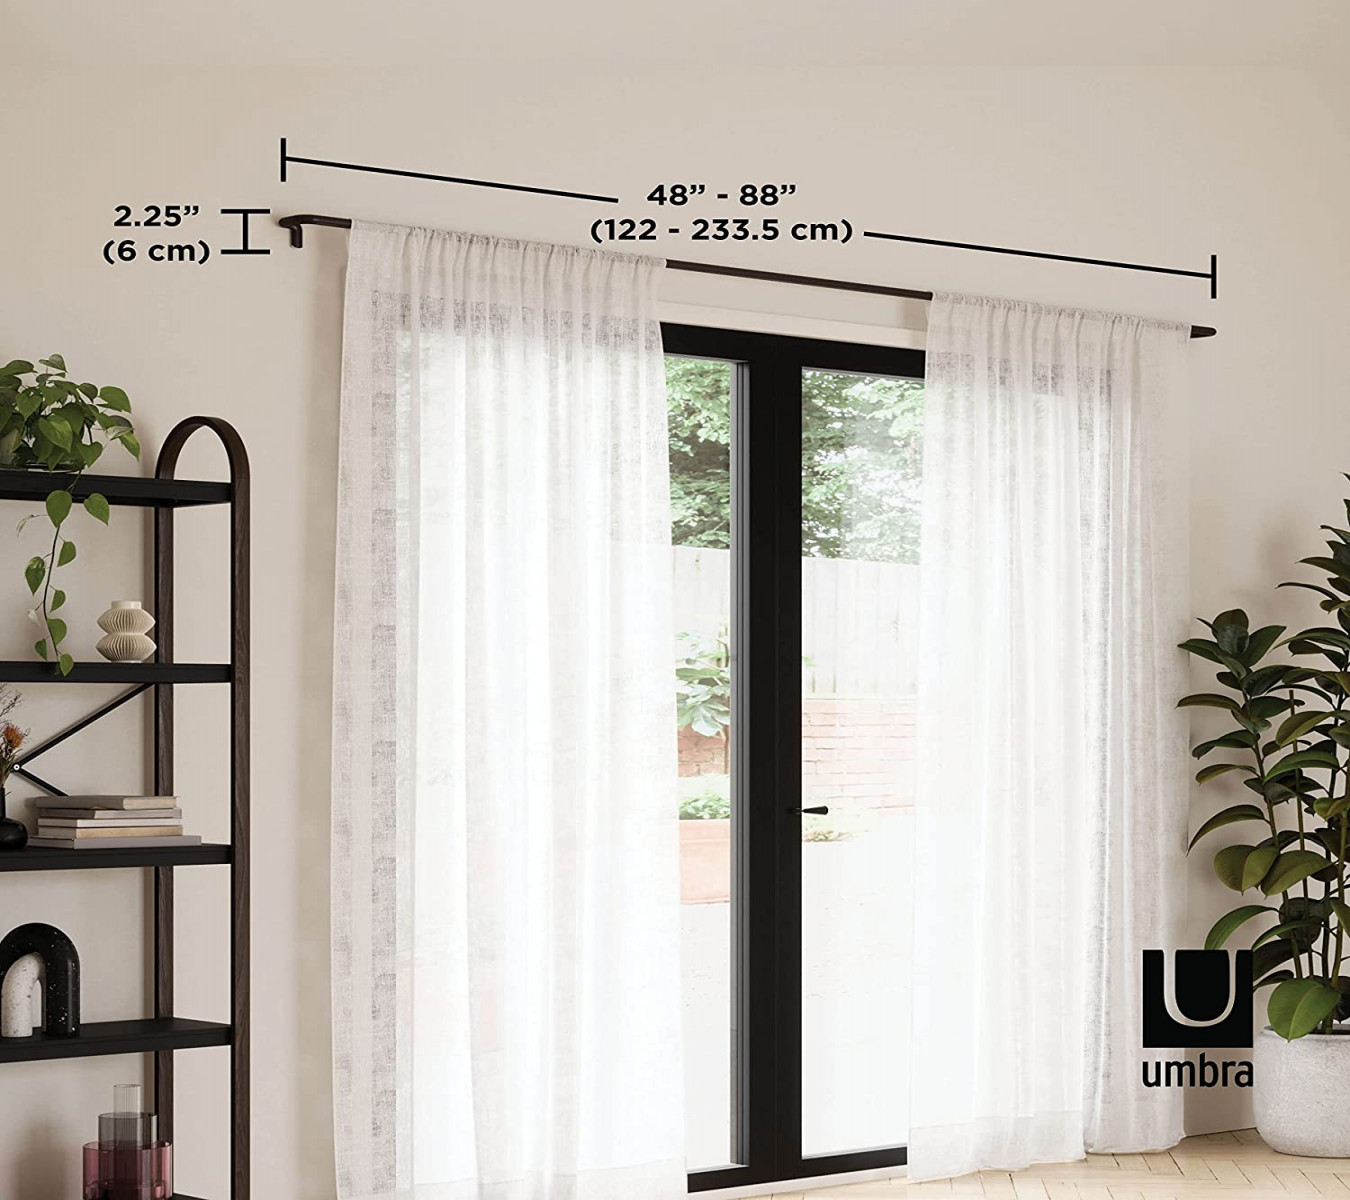 Umbra Twilight Twilight Single Curtain Rod Set - Wrap Around Design is  Ideal for Blackout or Room Darkening Panels, -, Bronze, / Stainless